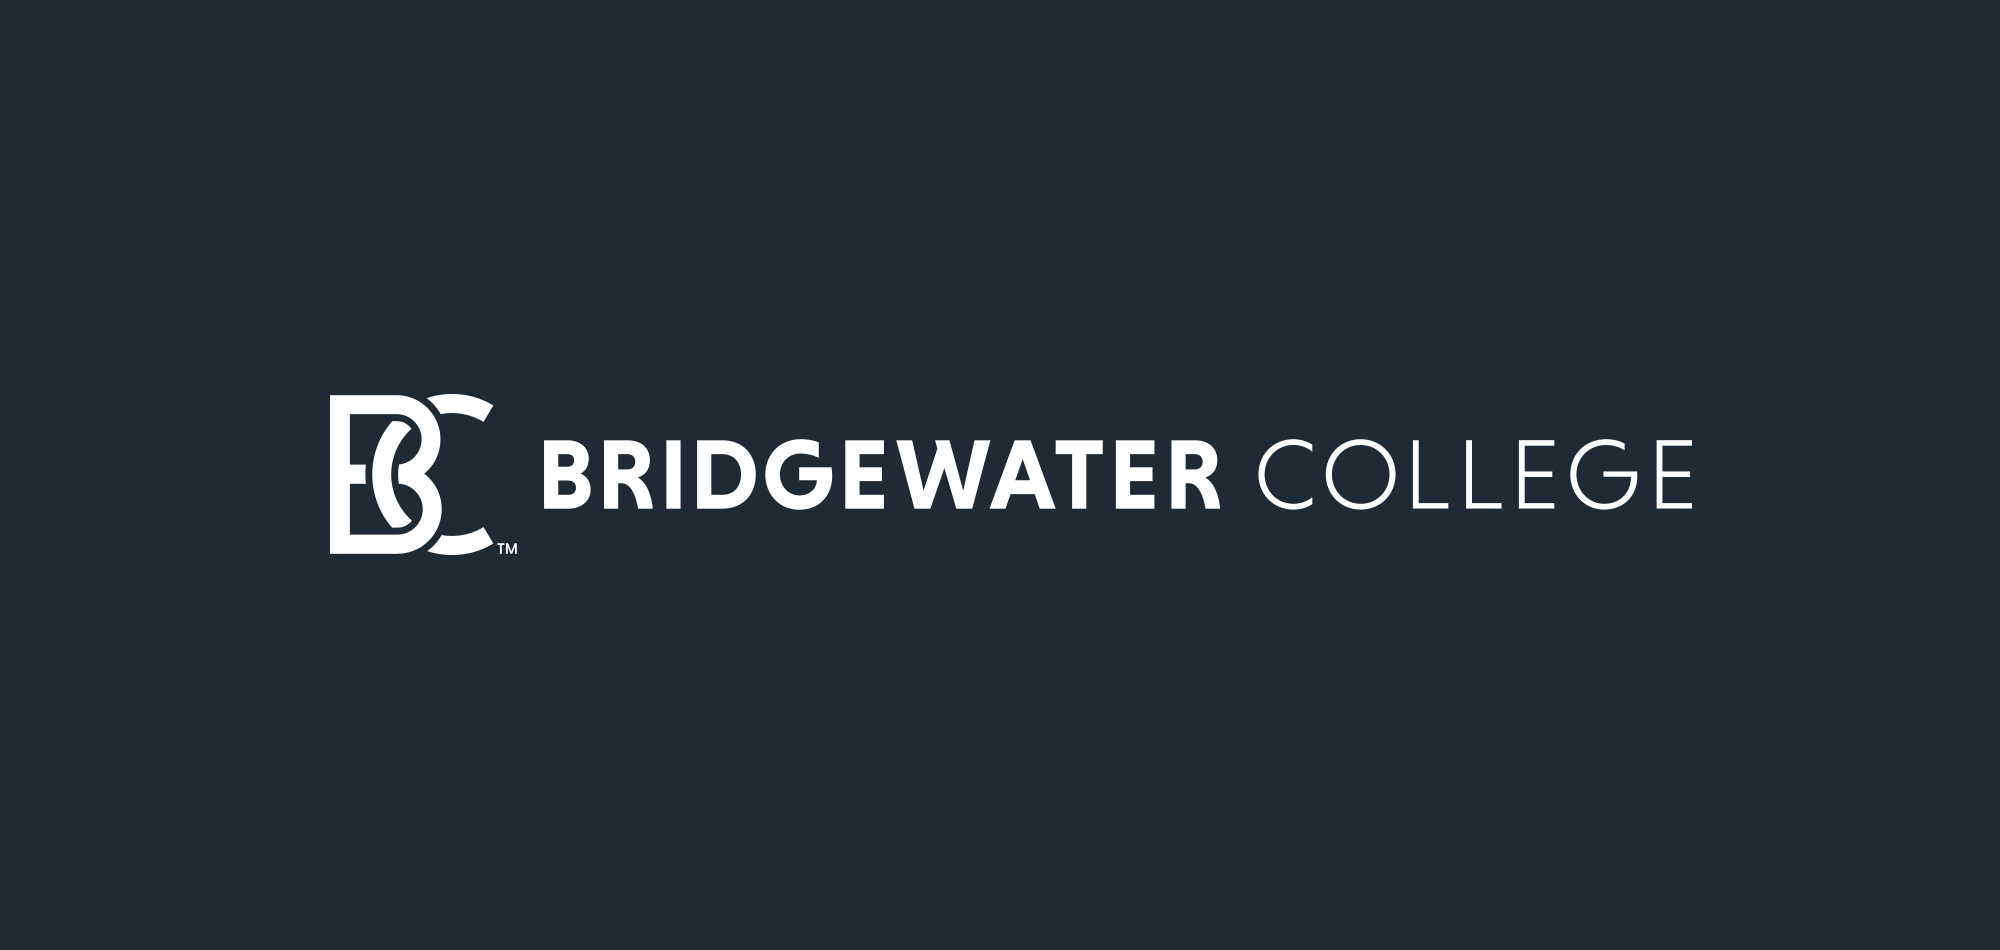 Bridgewater College logo, white on black treatment.